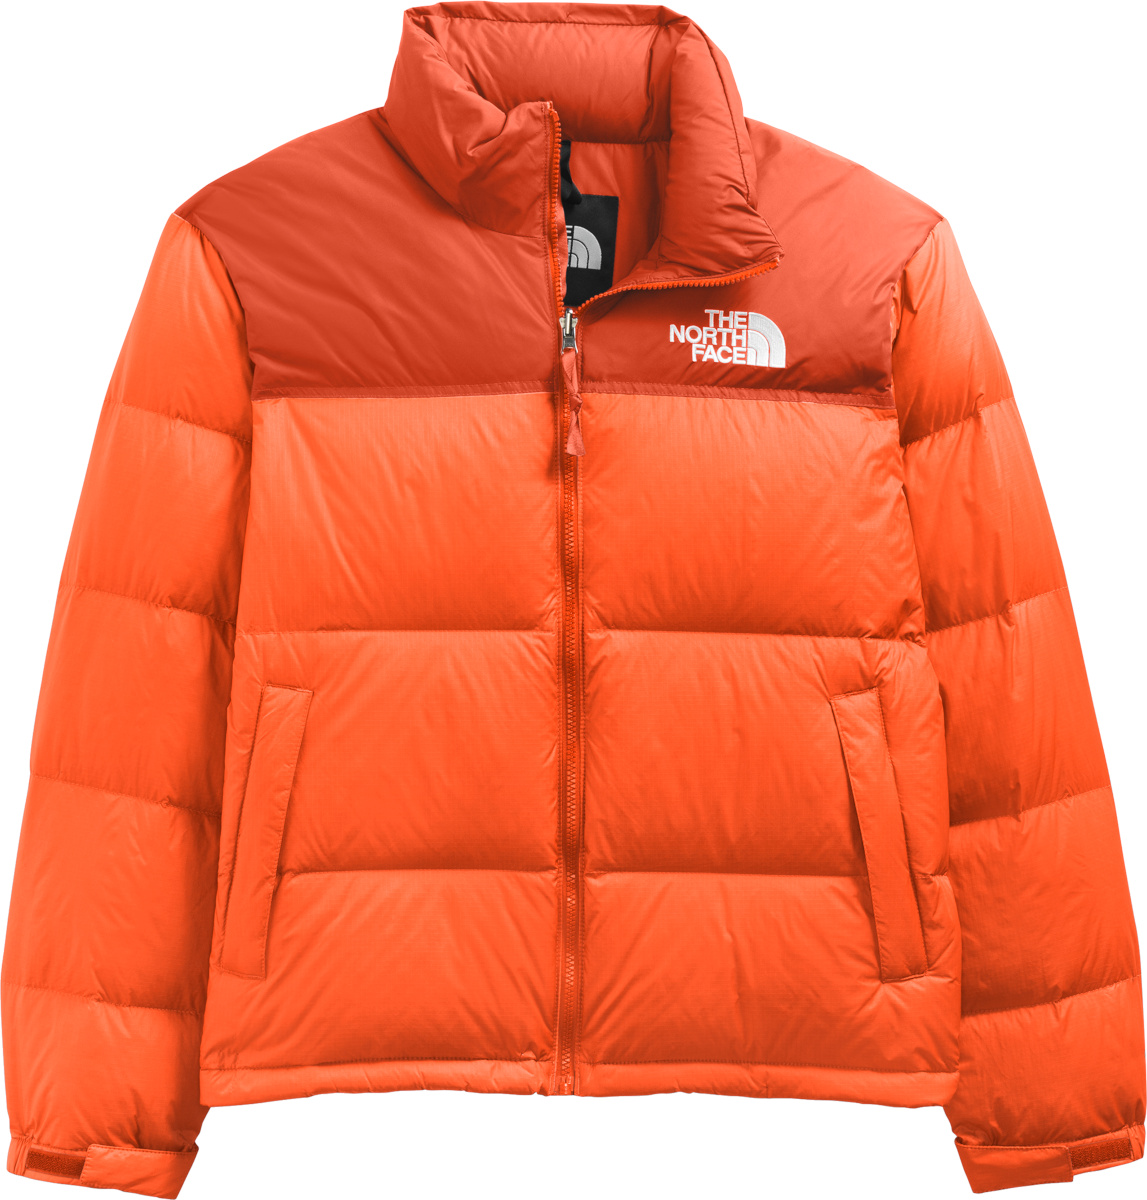 The North Face Burnt Orange '1996 Nuptse' Jacket | Incorporated Style